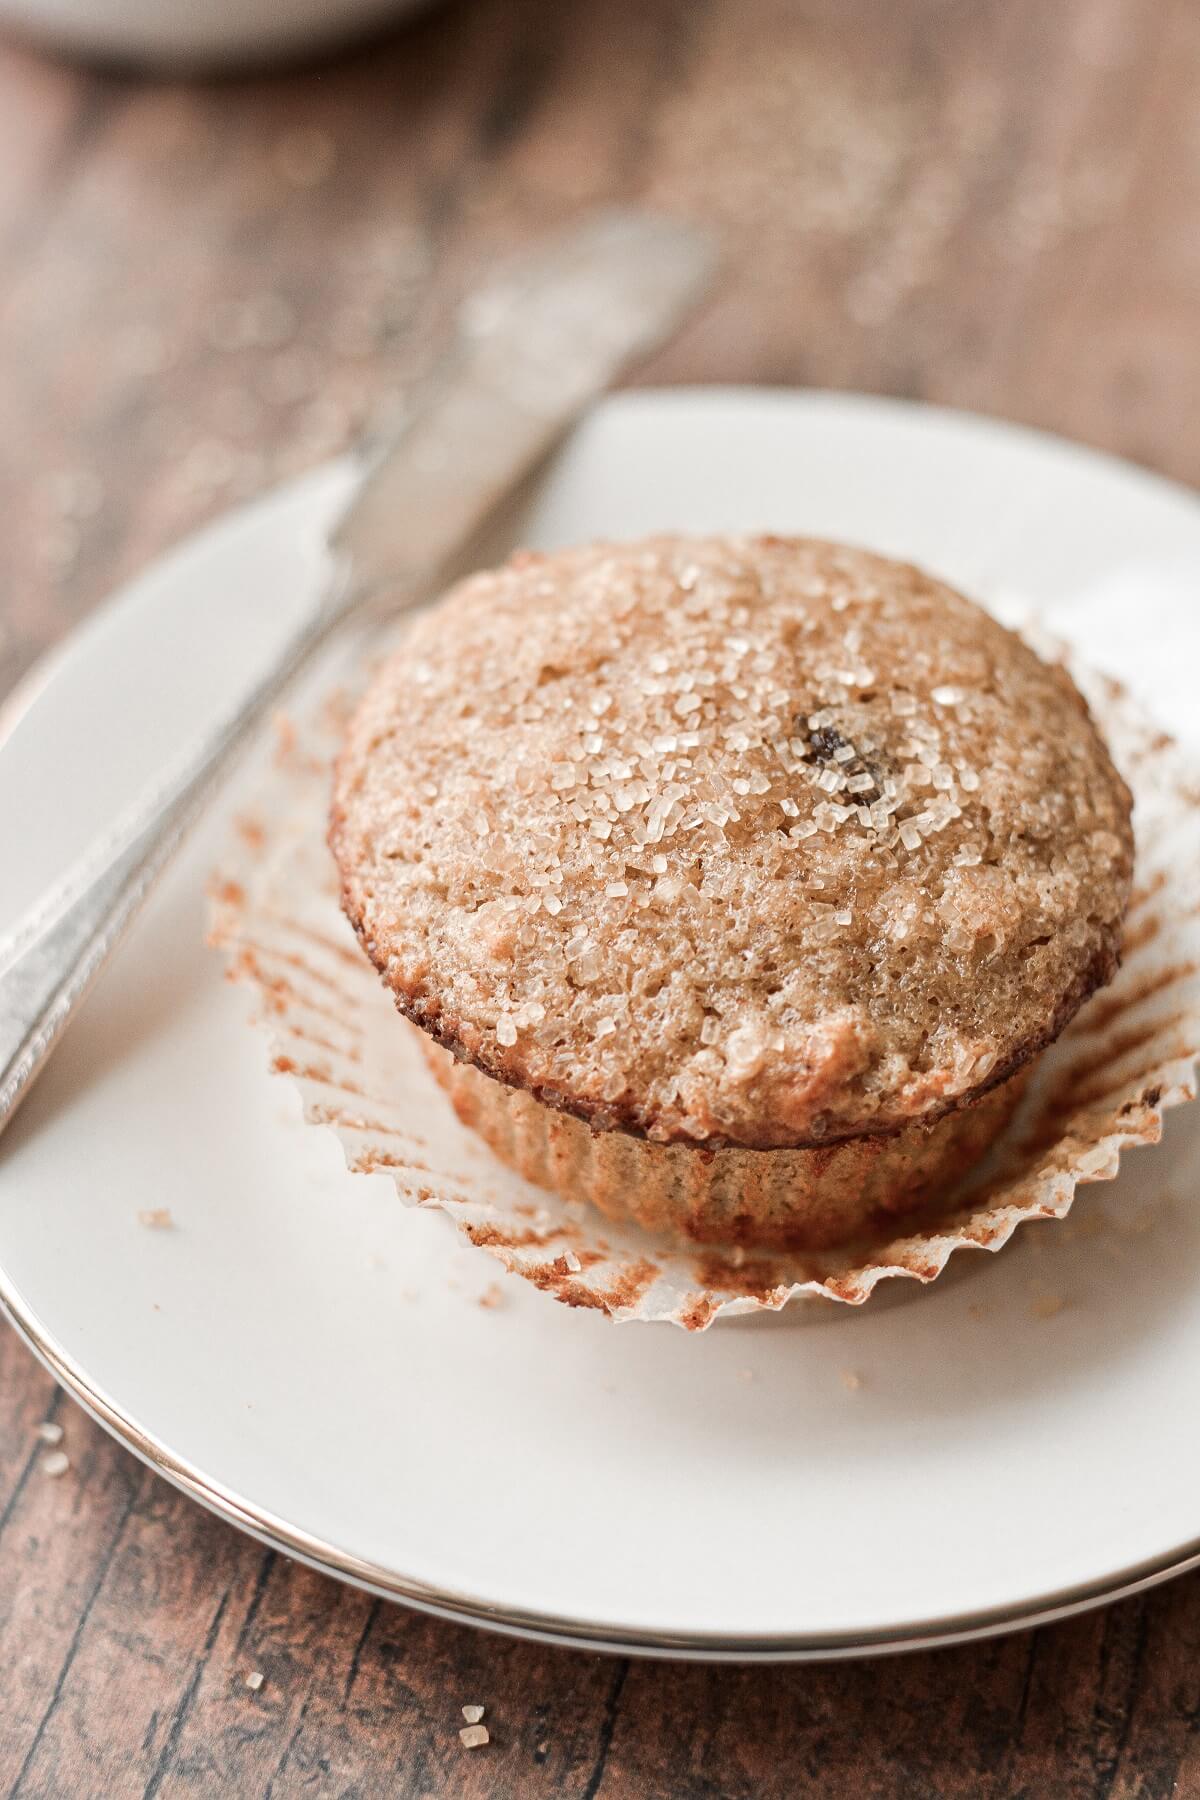 An oatmeal raisin muffin, sprinkled with coarse sugar.